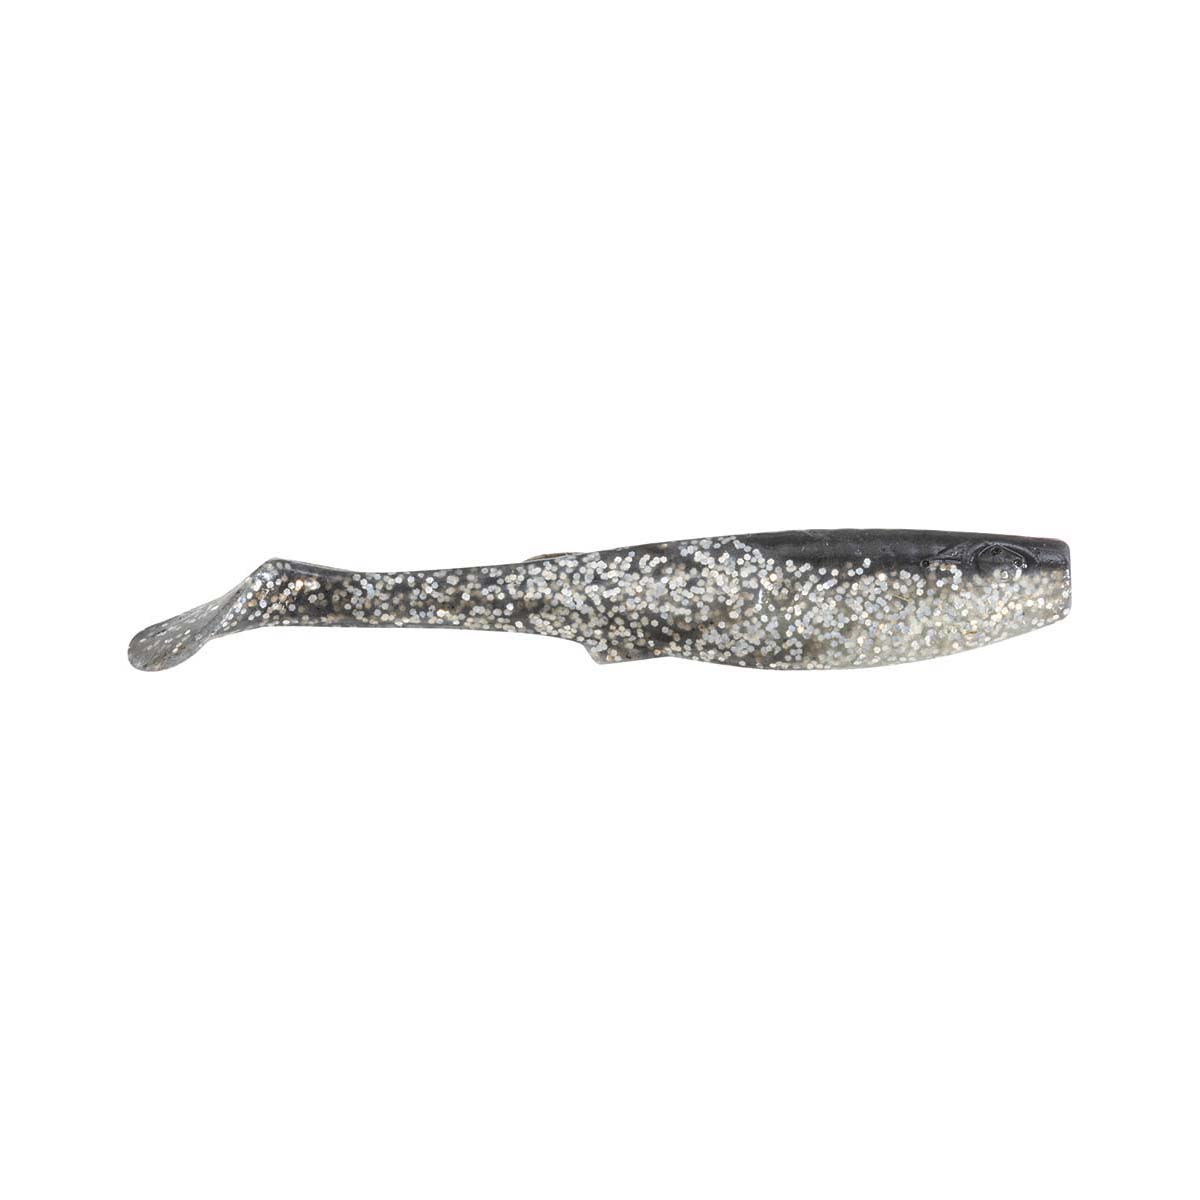 Berkley Gulp! Paddletail Shad Soft Plastic Lure 4in Black / Silver